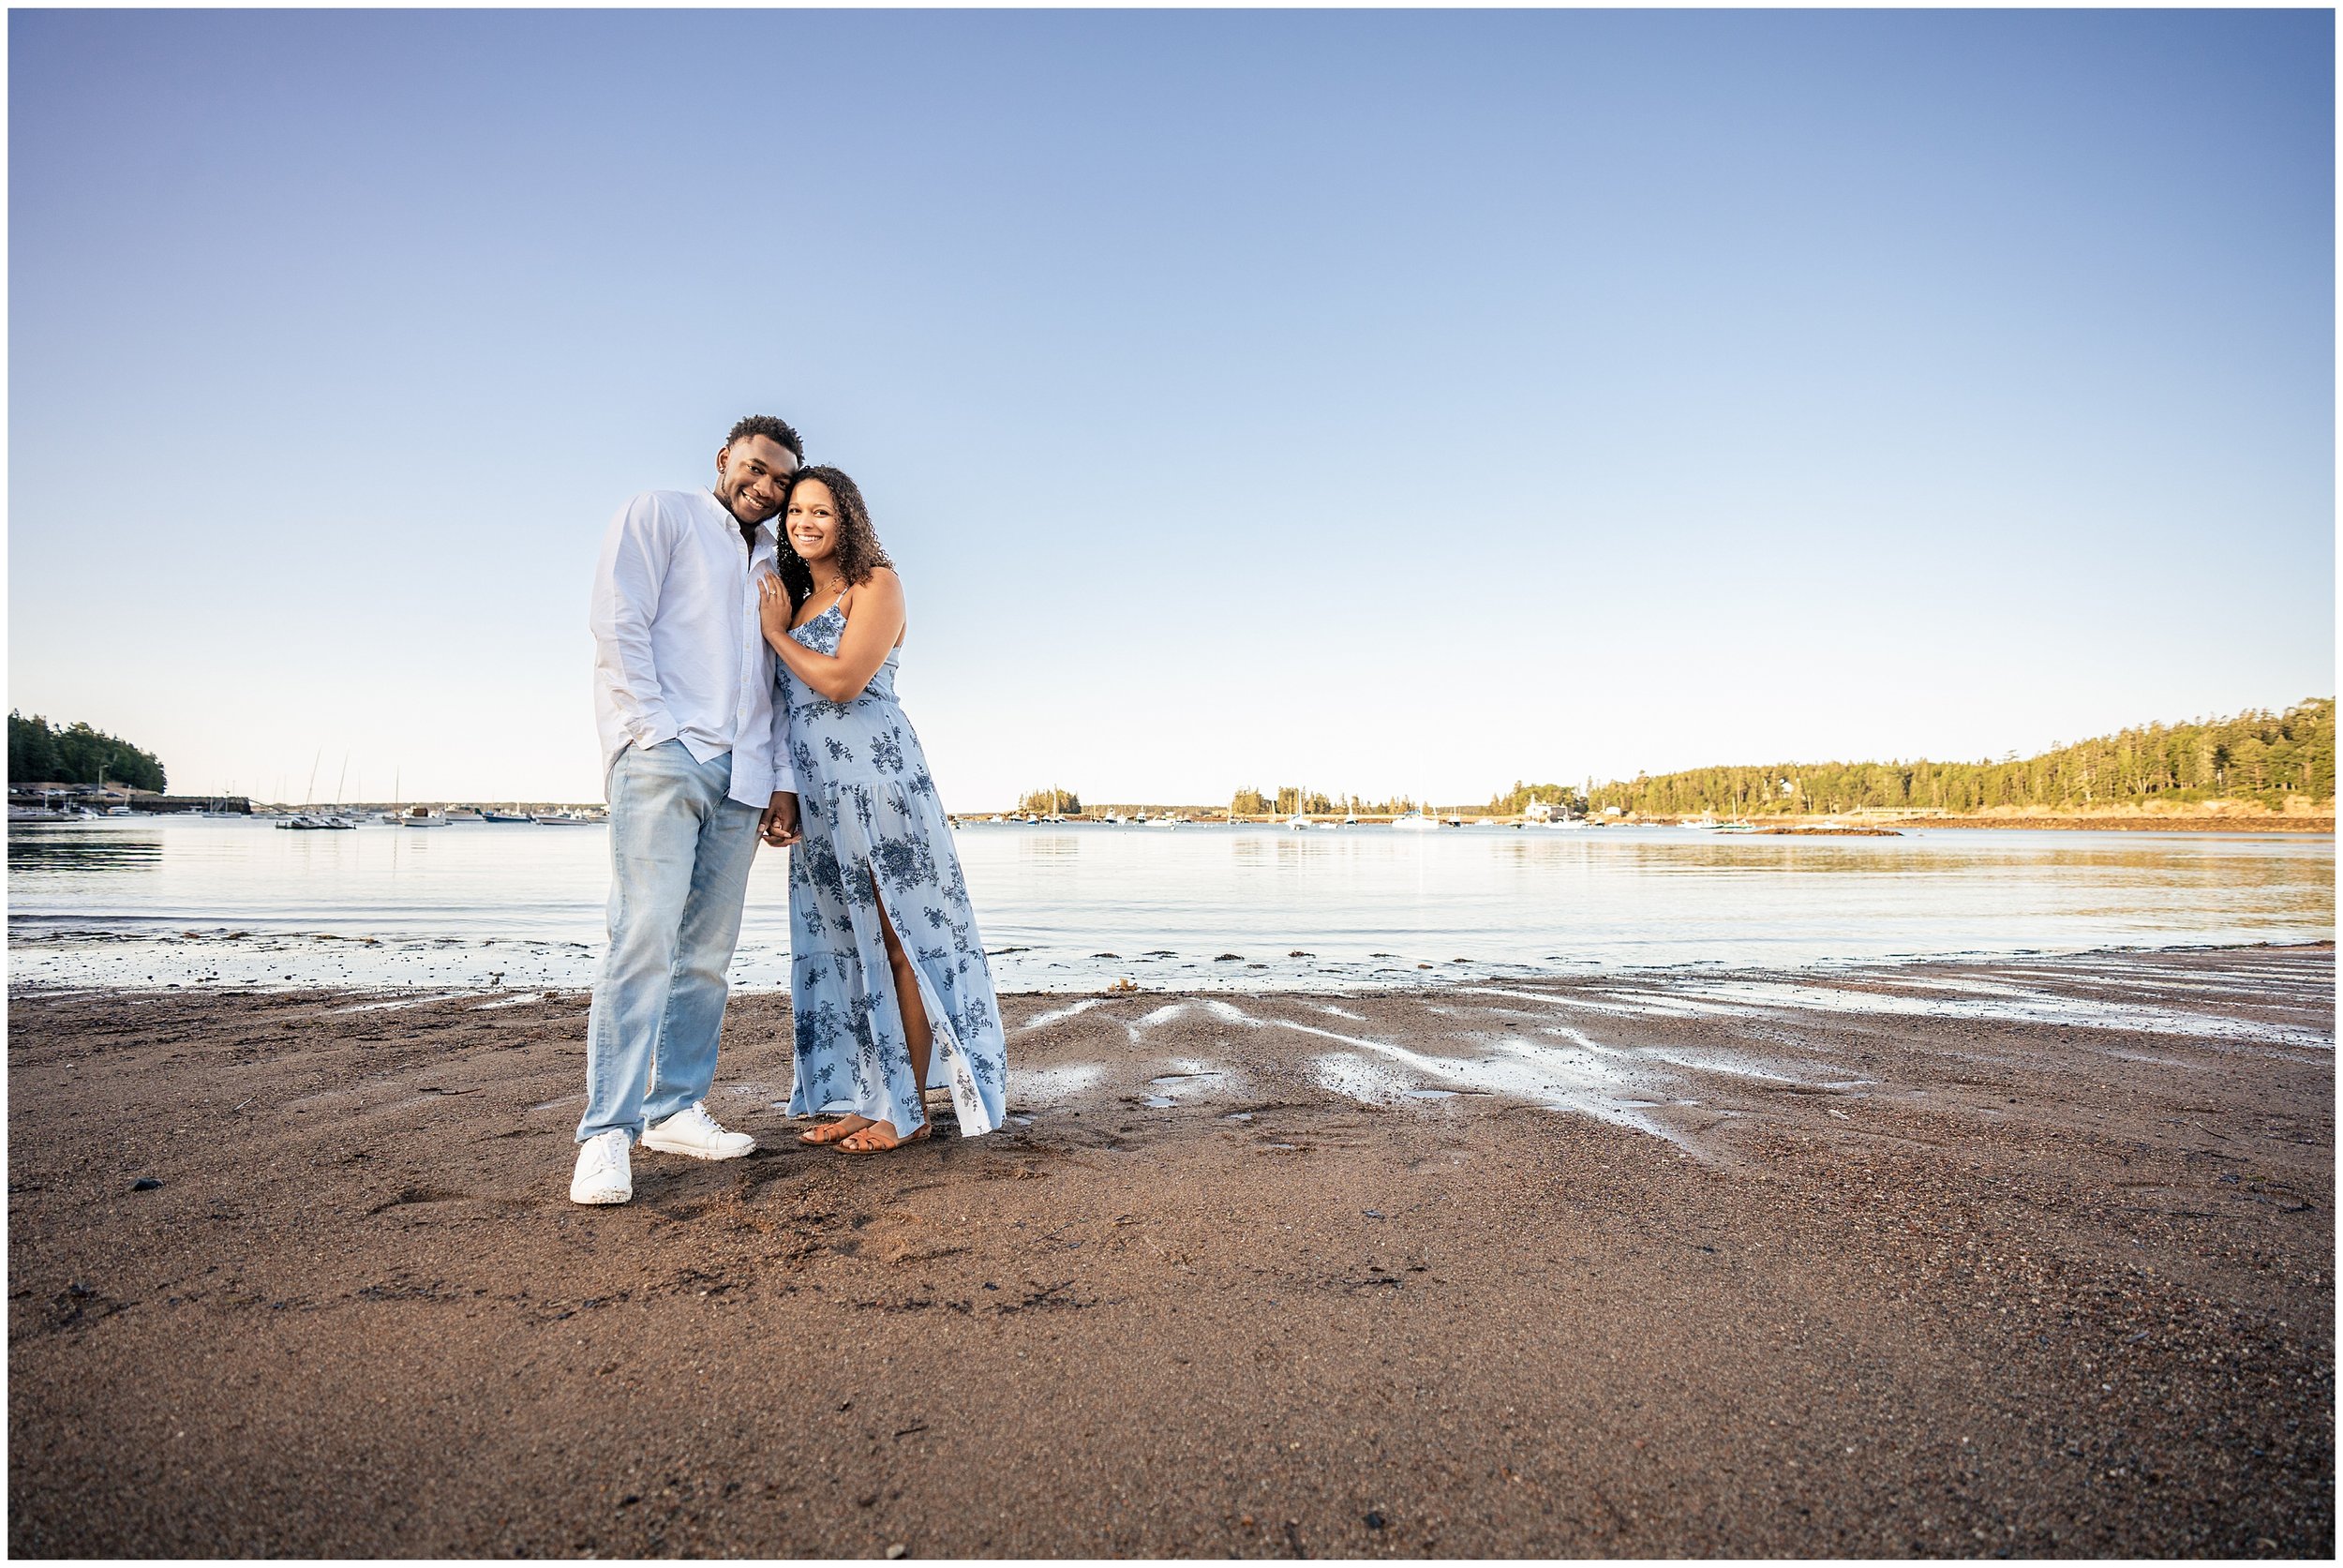 Acadia National Park Proposal Photographers, Acadia and Bar Harbor Wedding Photographers, Two Adventurous Souls- 080223_0023.jpg